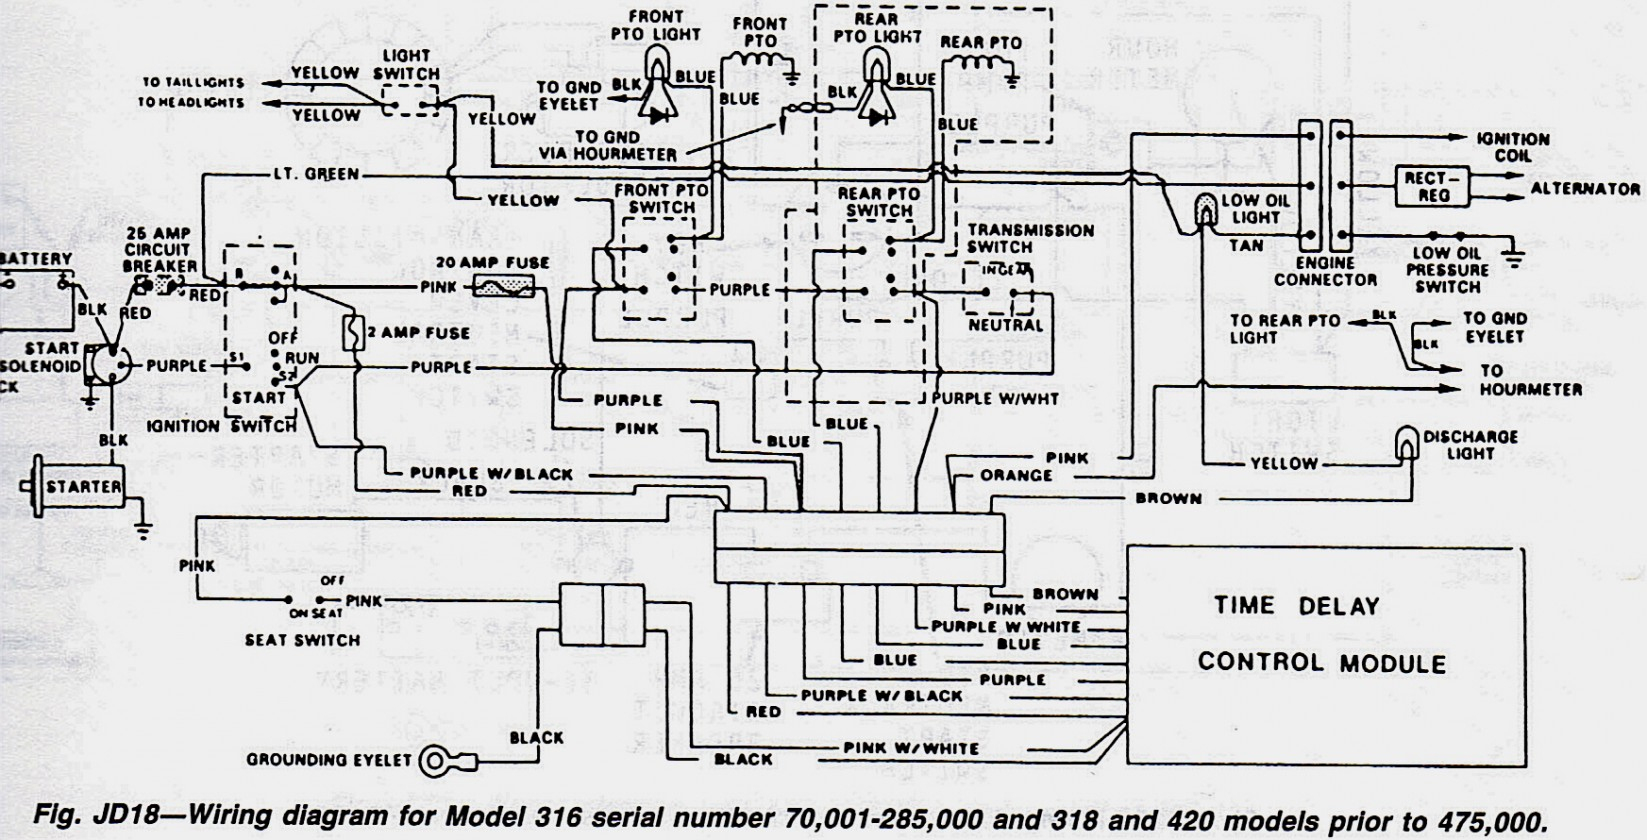 Wiring Diagram For Z425 John Deere | Wiring Diagram - John Deere Z425 Wiring Diagram